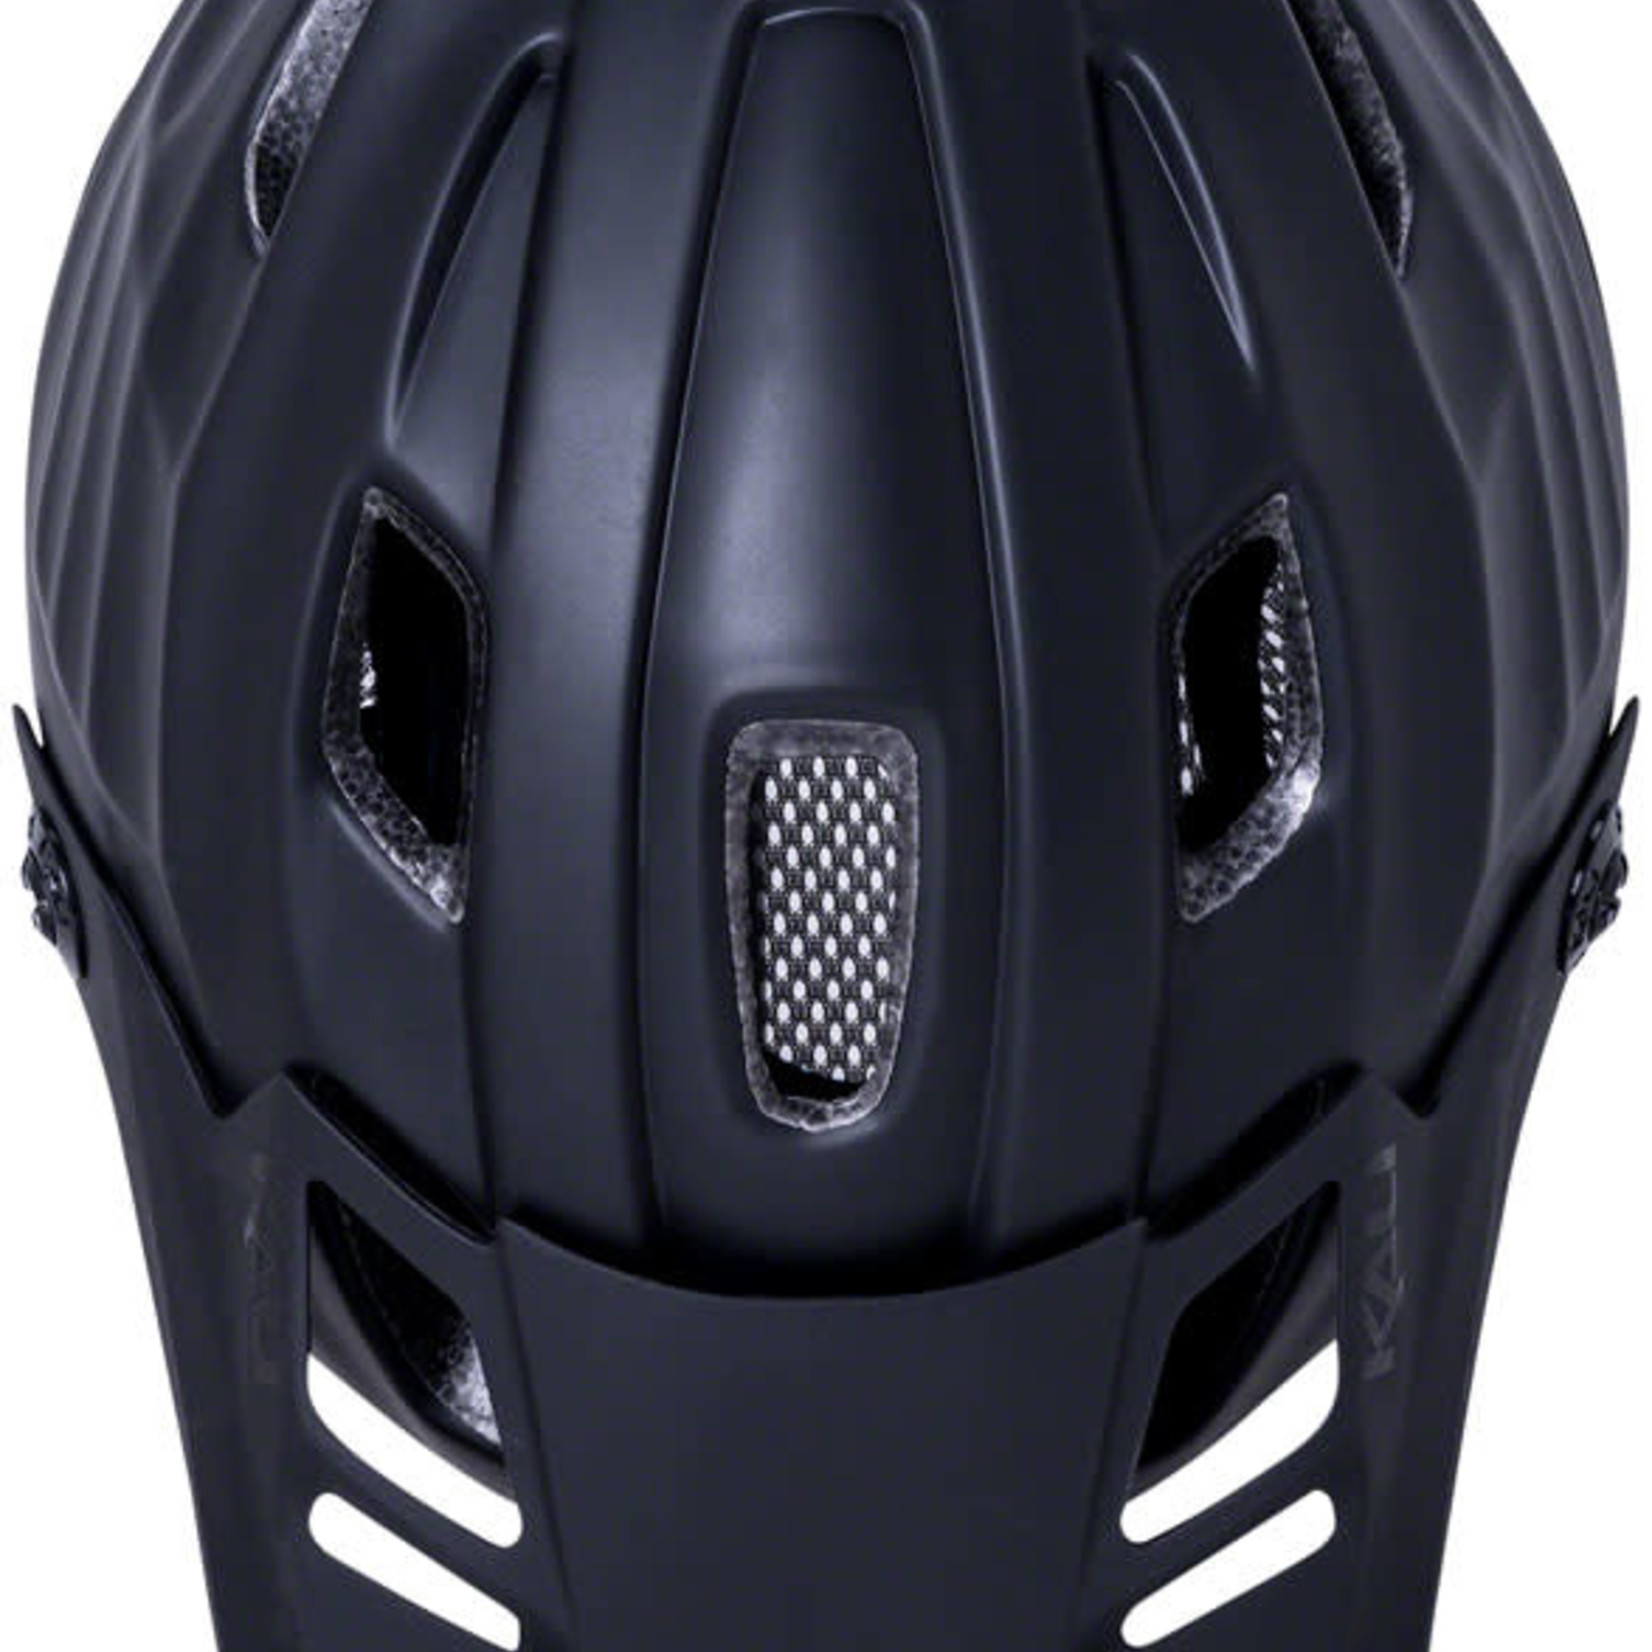 Kali Protectives Kali Protectives Maya 3.0 Helmet - Solid Matte Black/Black, Small/Medium